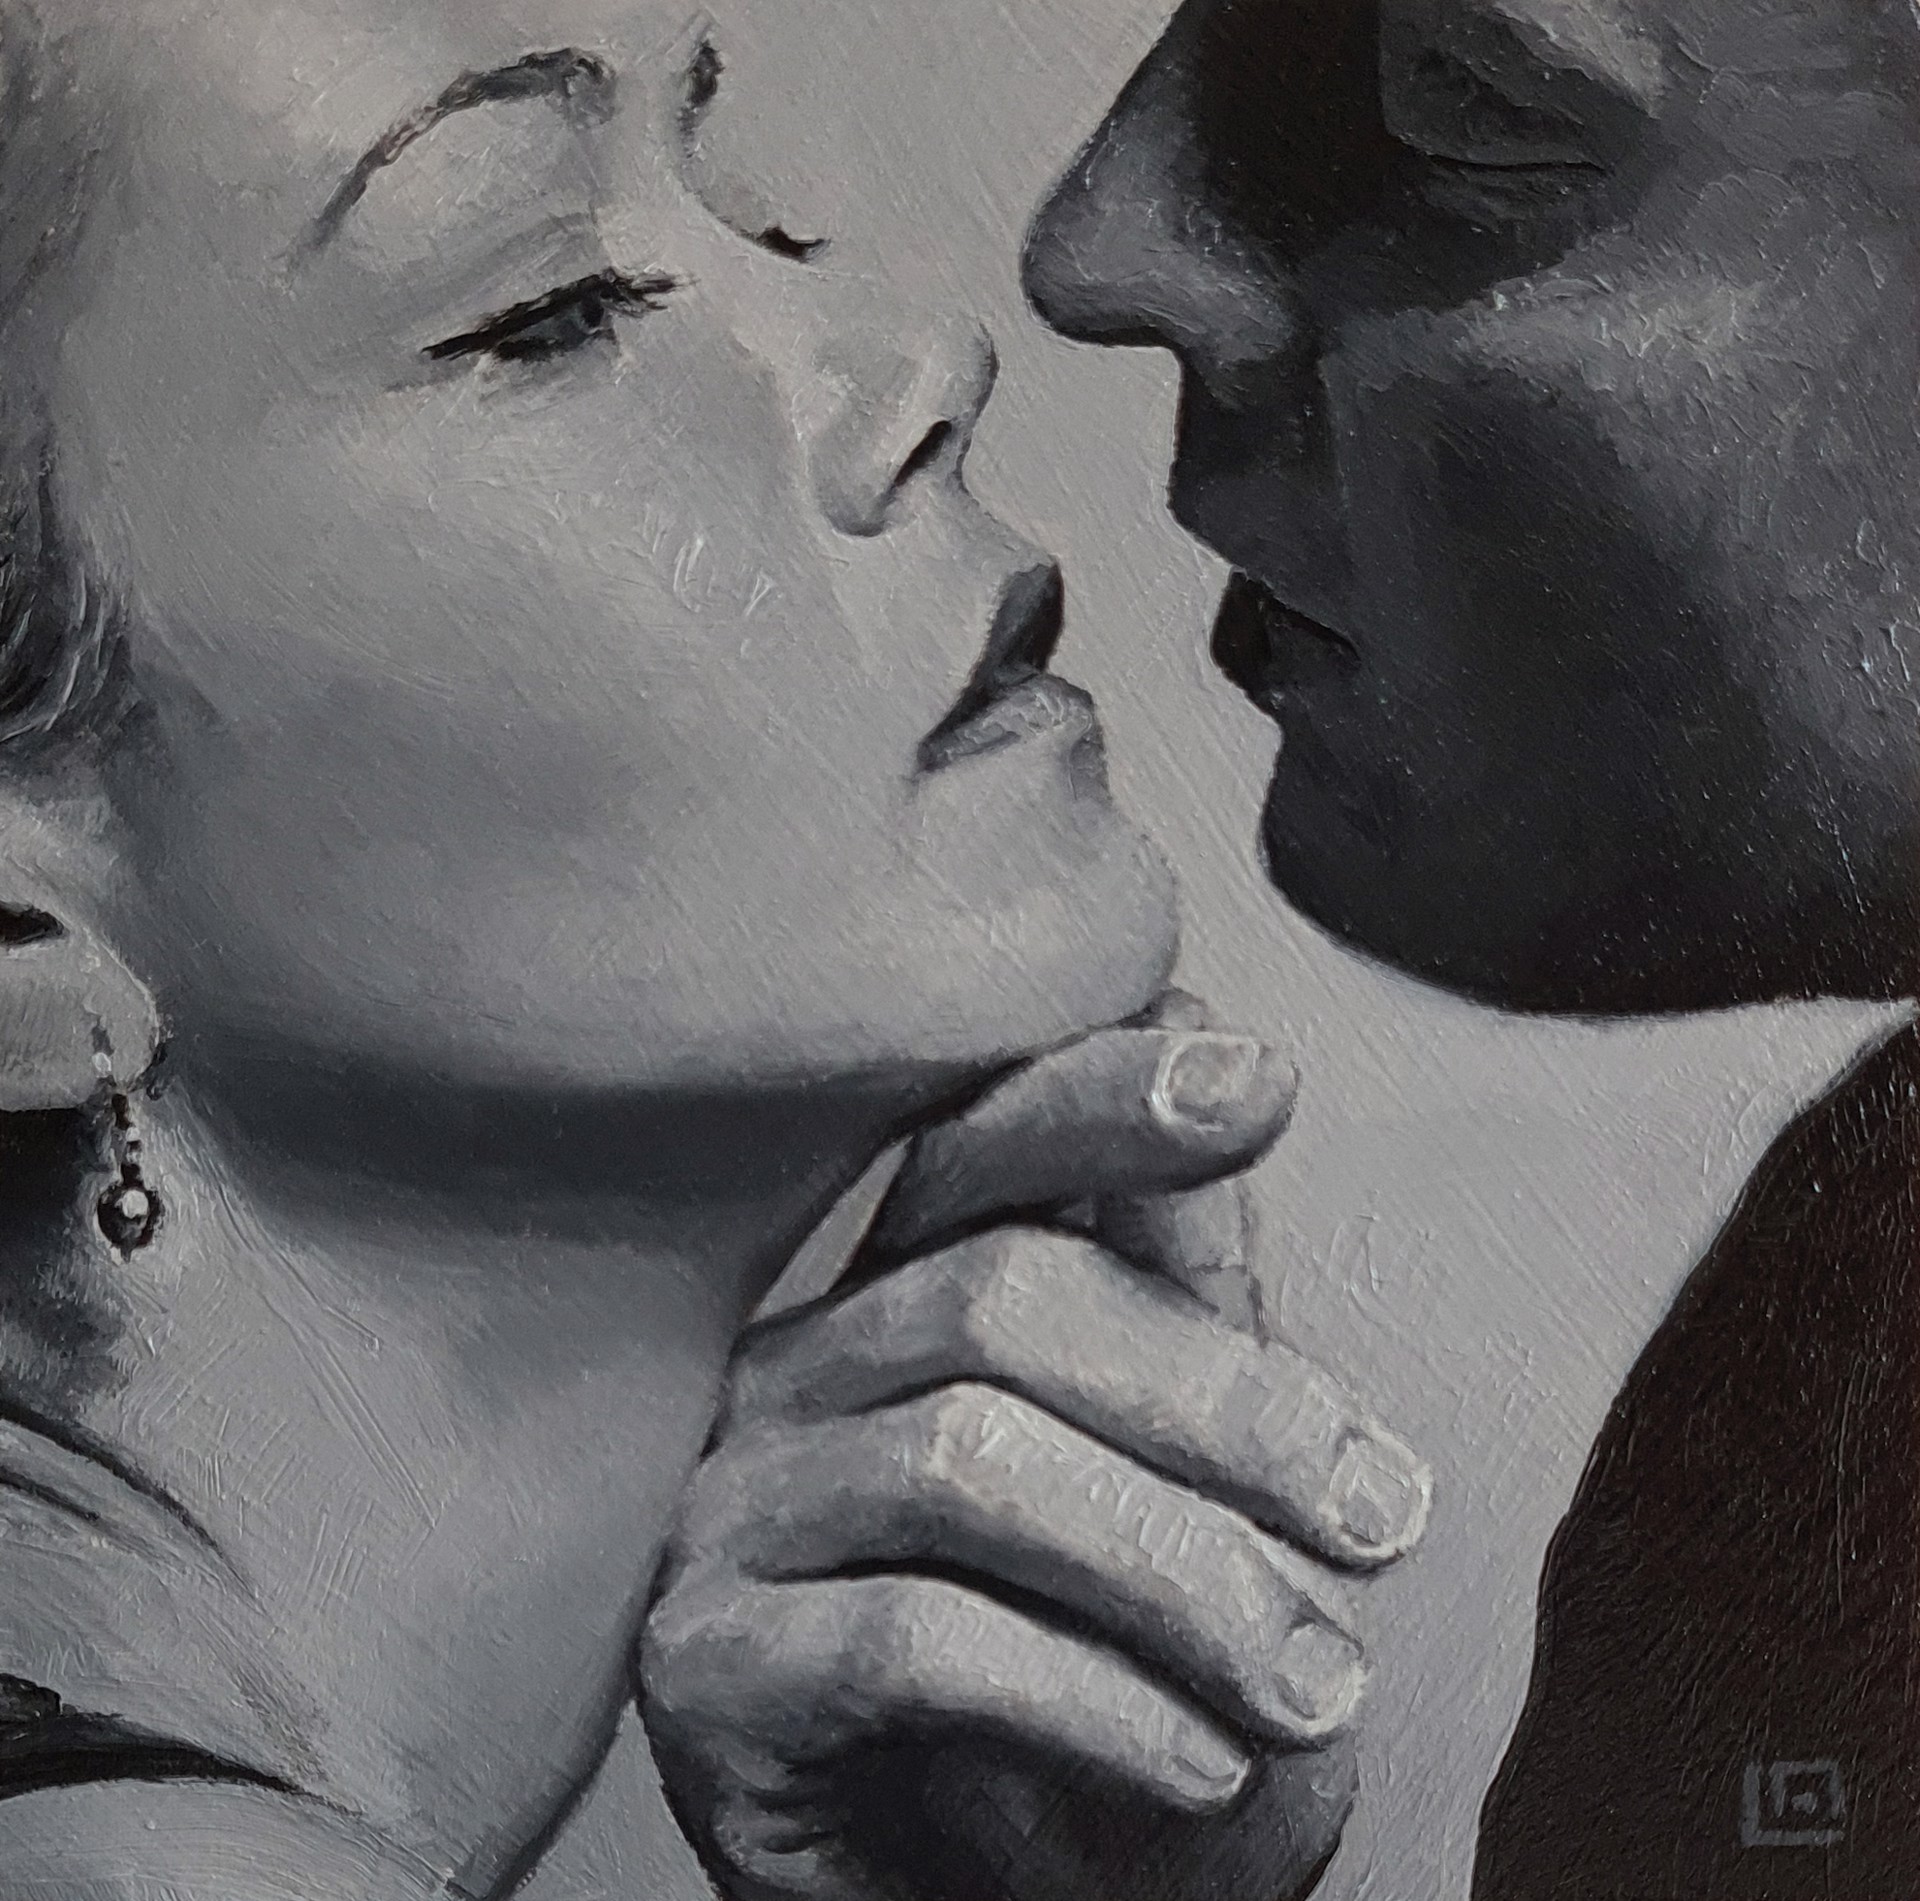 The Kiss #5 by Linda Delahaye